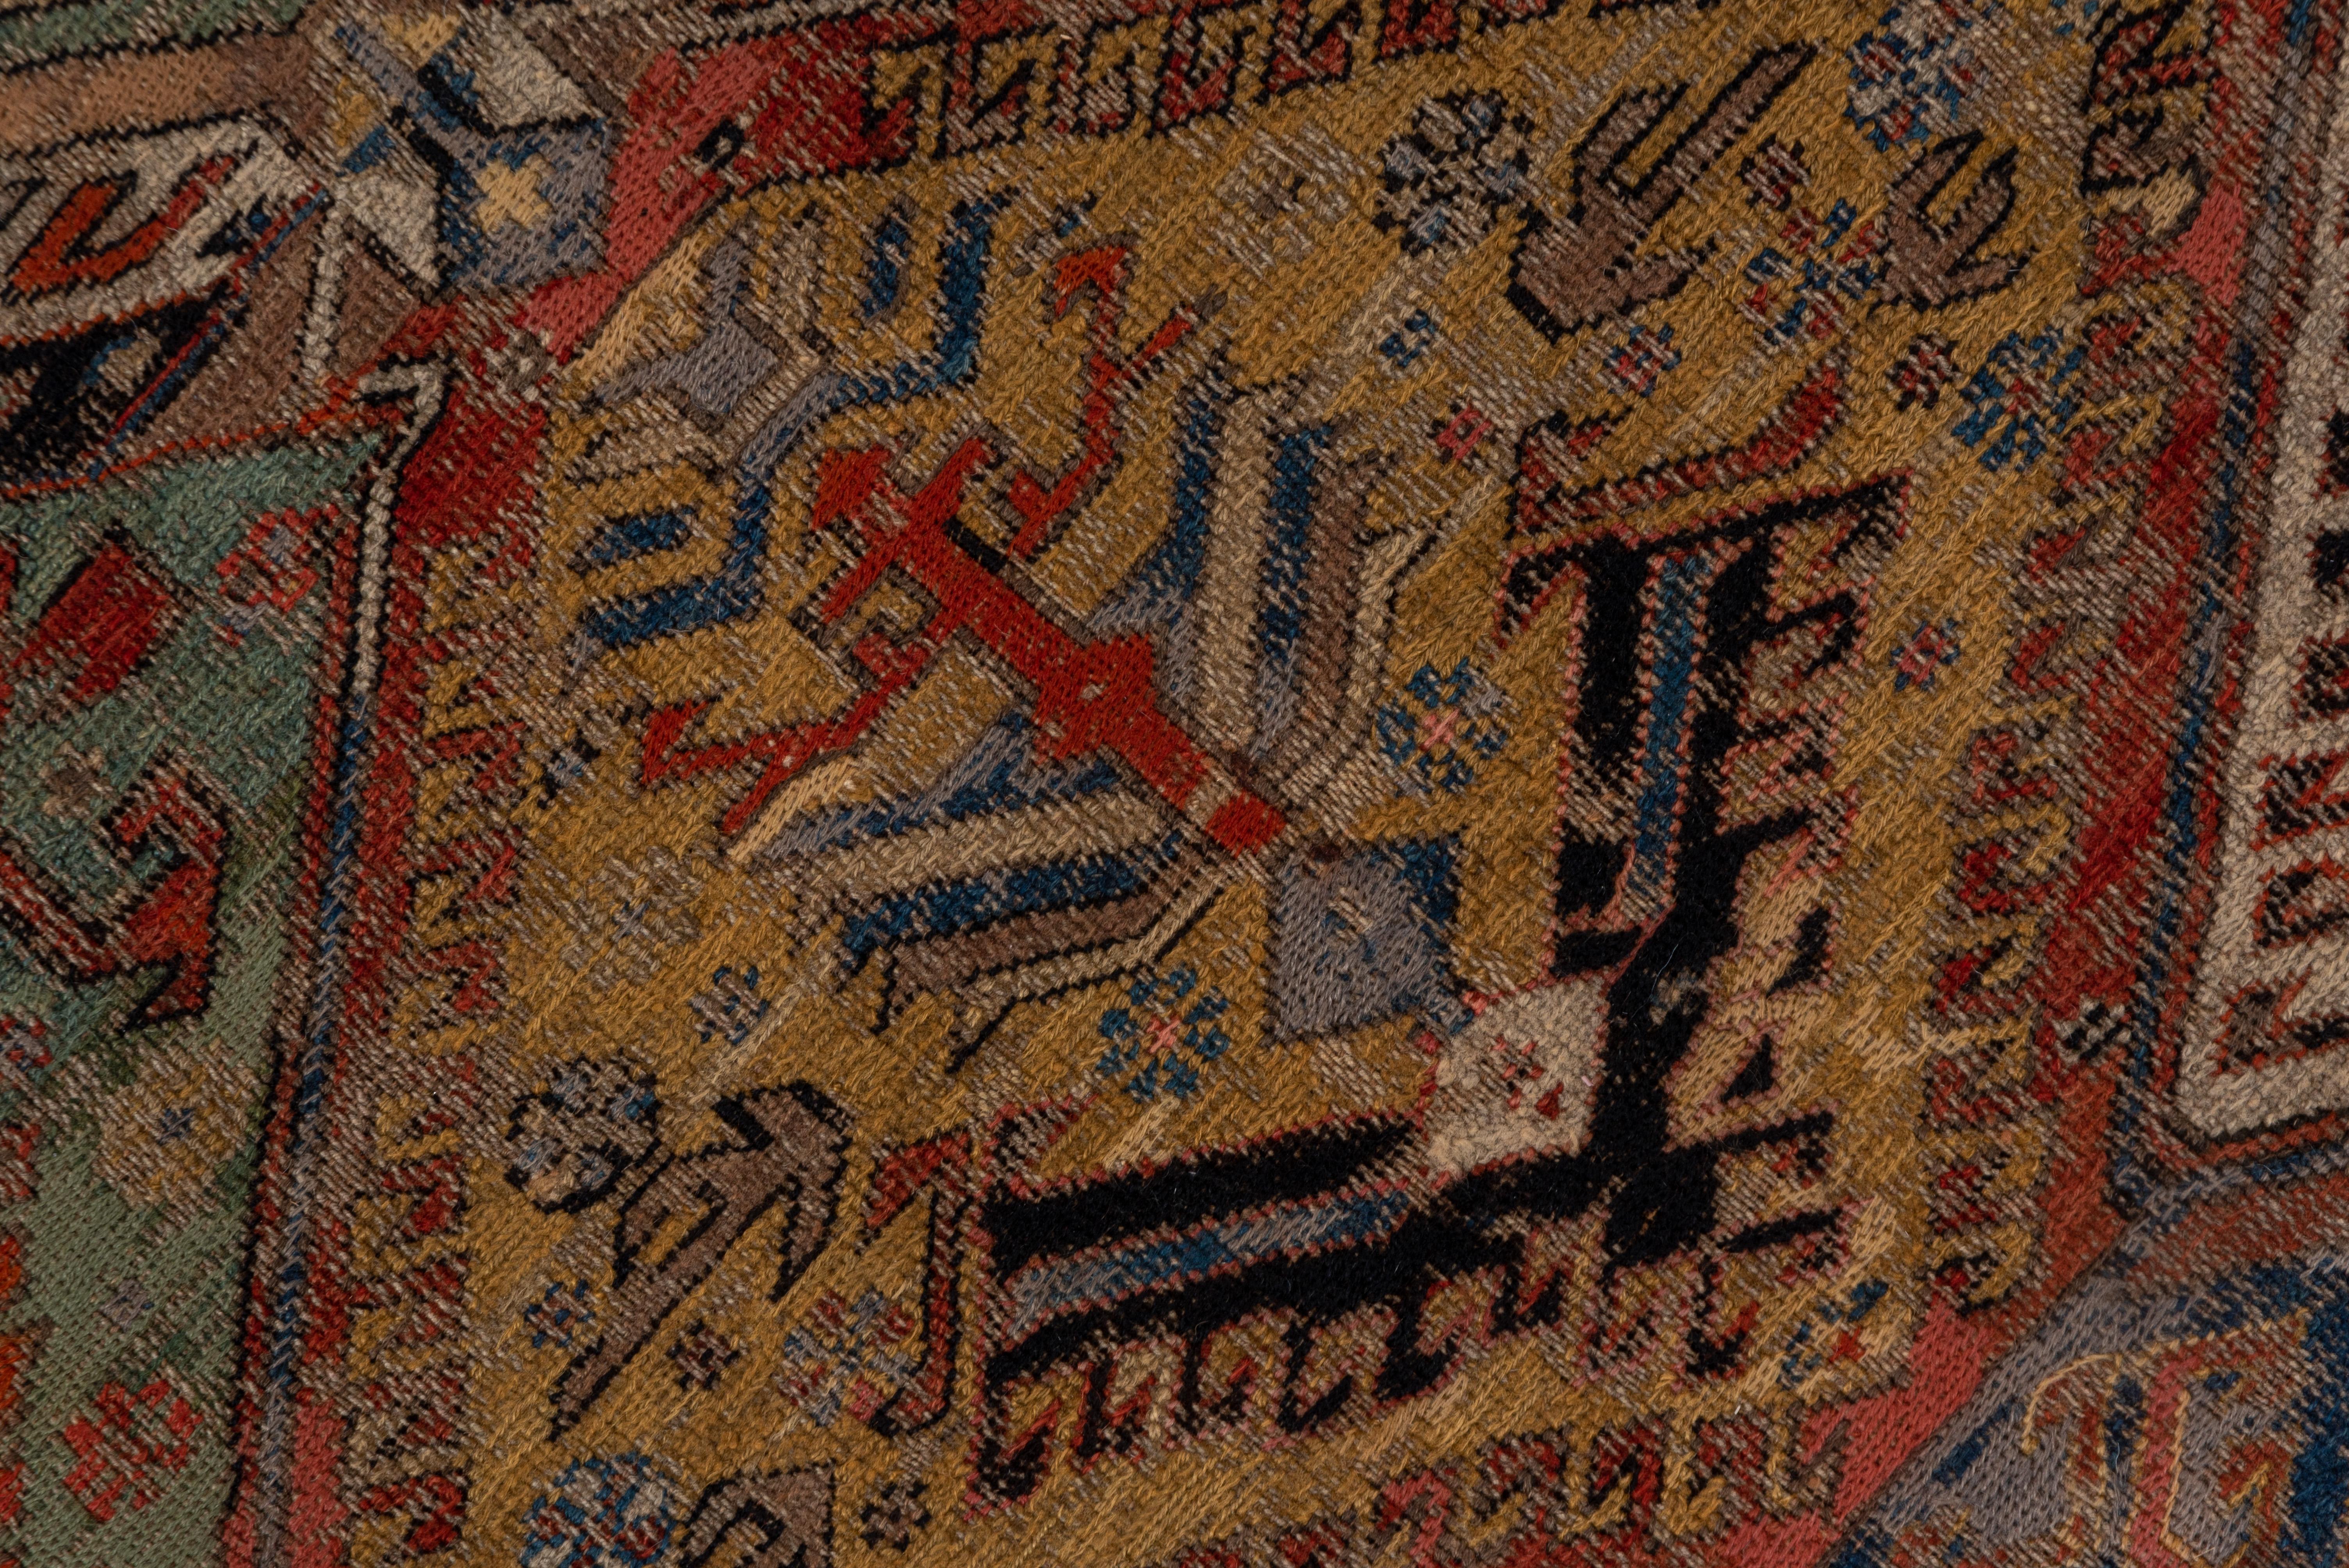 Wool Antique Kuba Caucasian Sumak Carpet, Late 19th Century Handwoven, Colorful For Sale